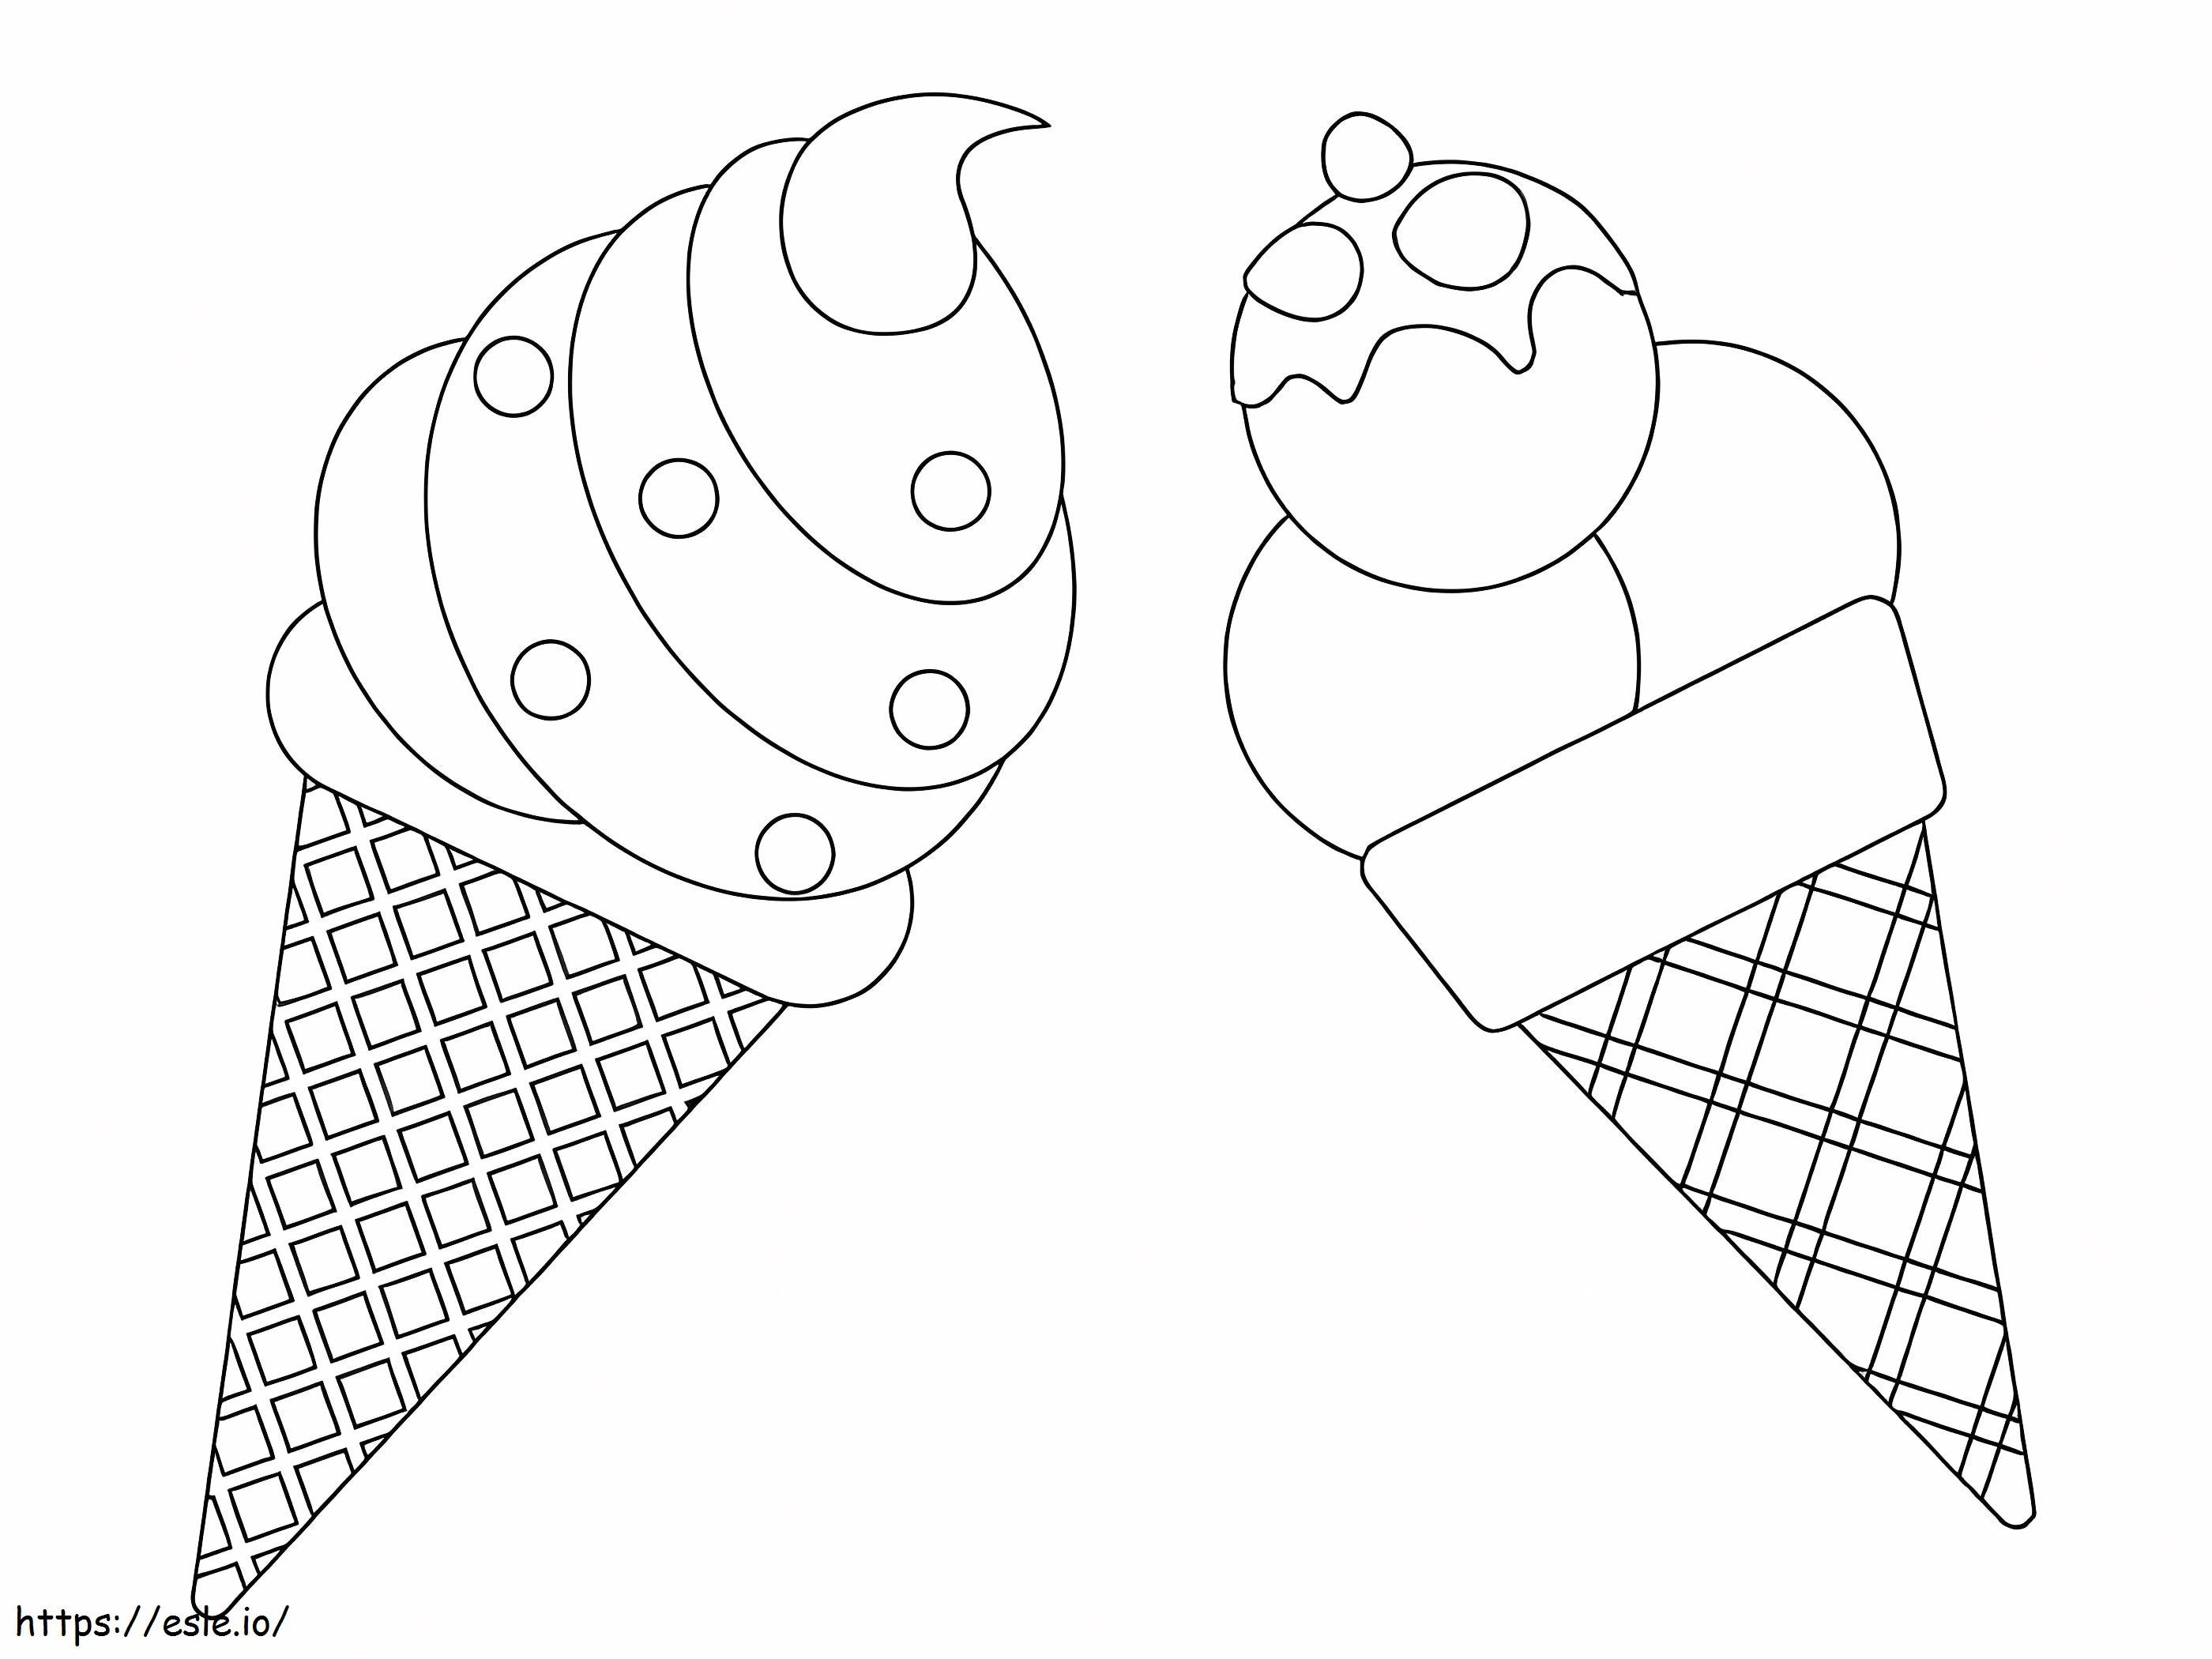 Dois sorvetes para colorir